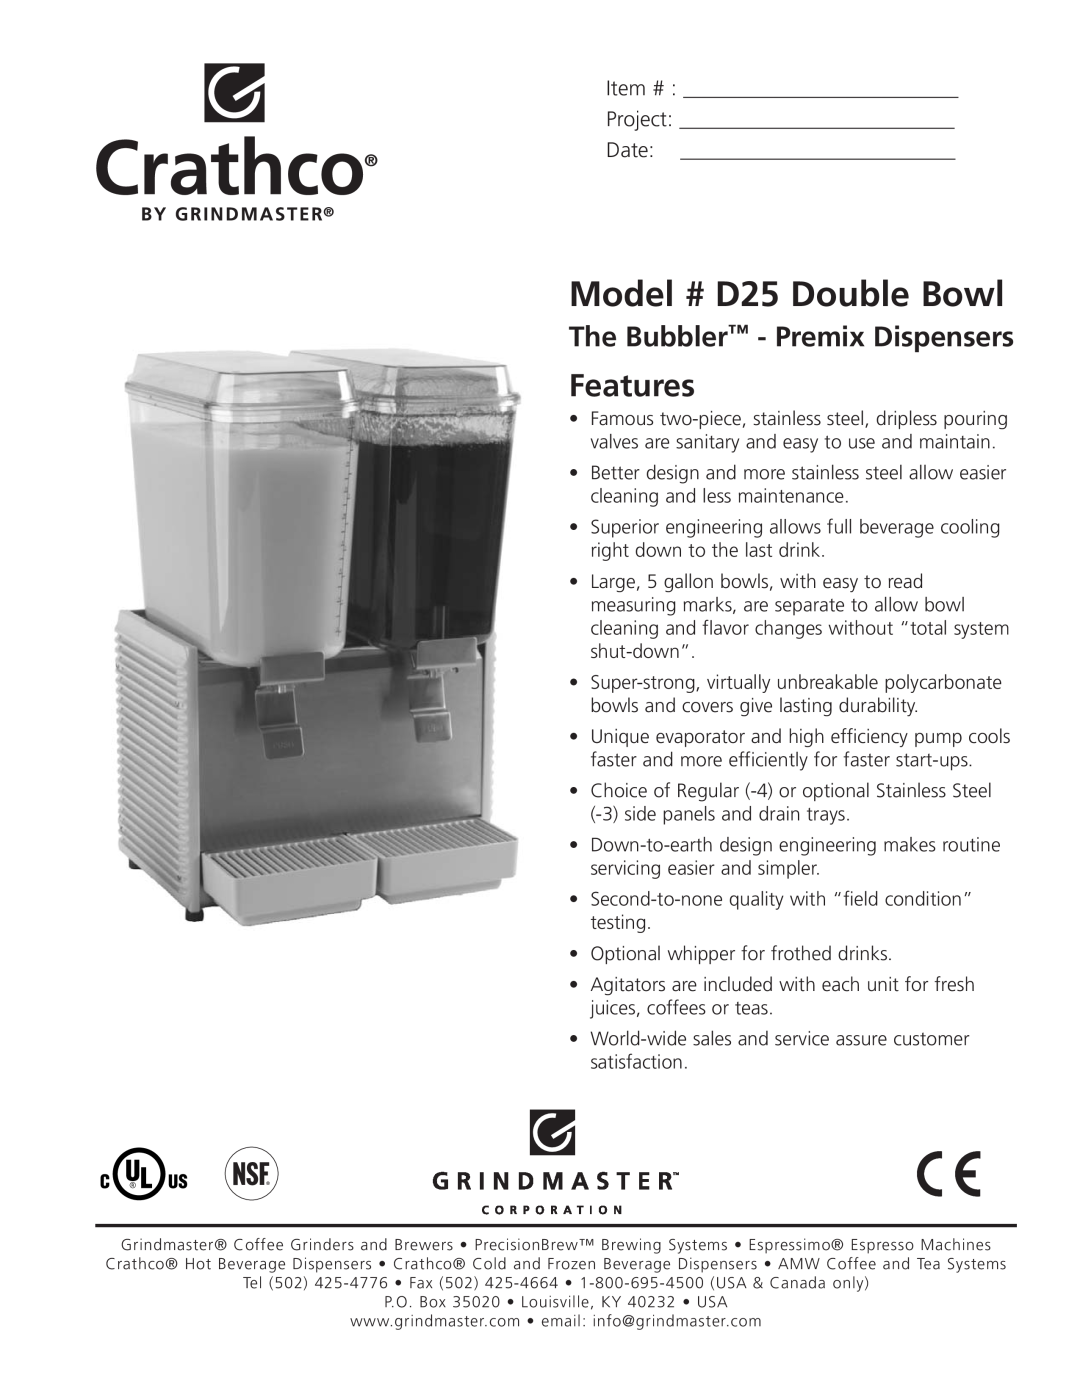 Grindmaster manual The Bubbler - Premix Dispensers, Model # D25 Double Bowl, Features, Item #, Project, Date 